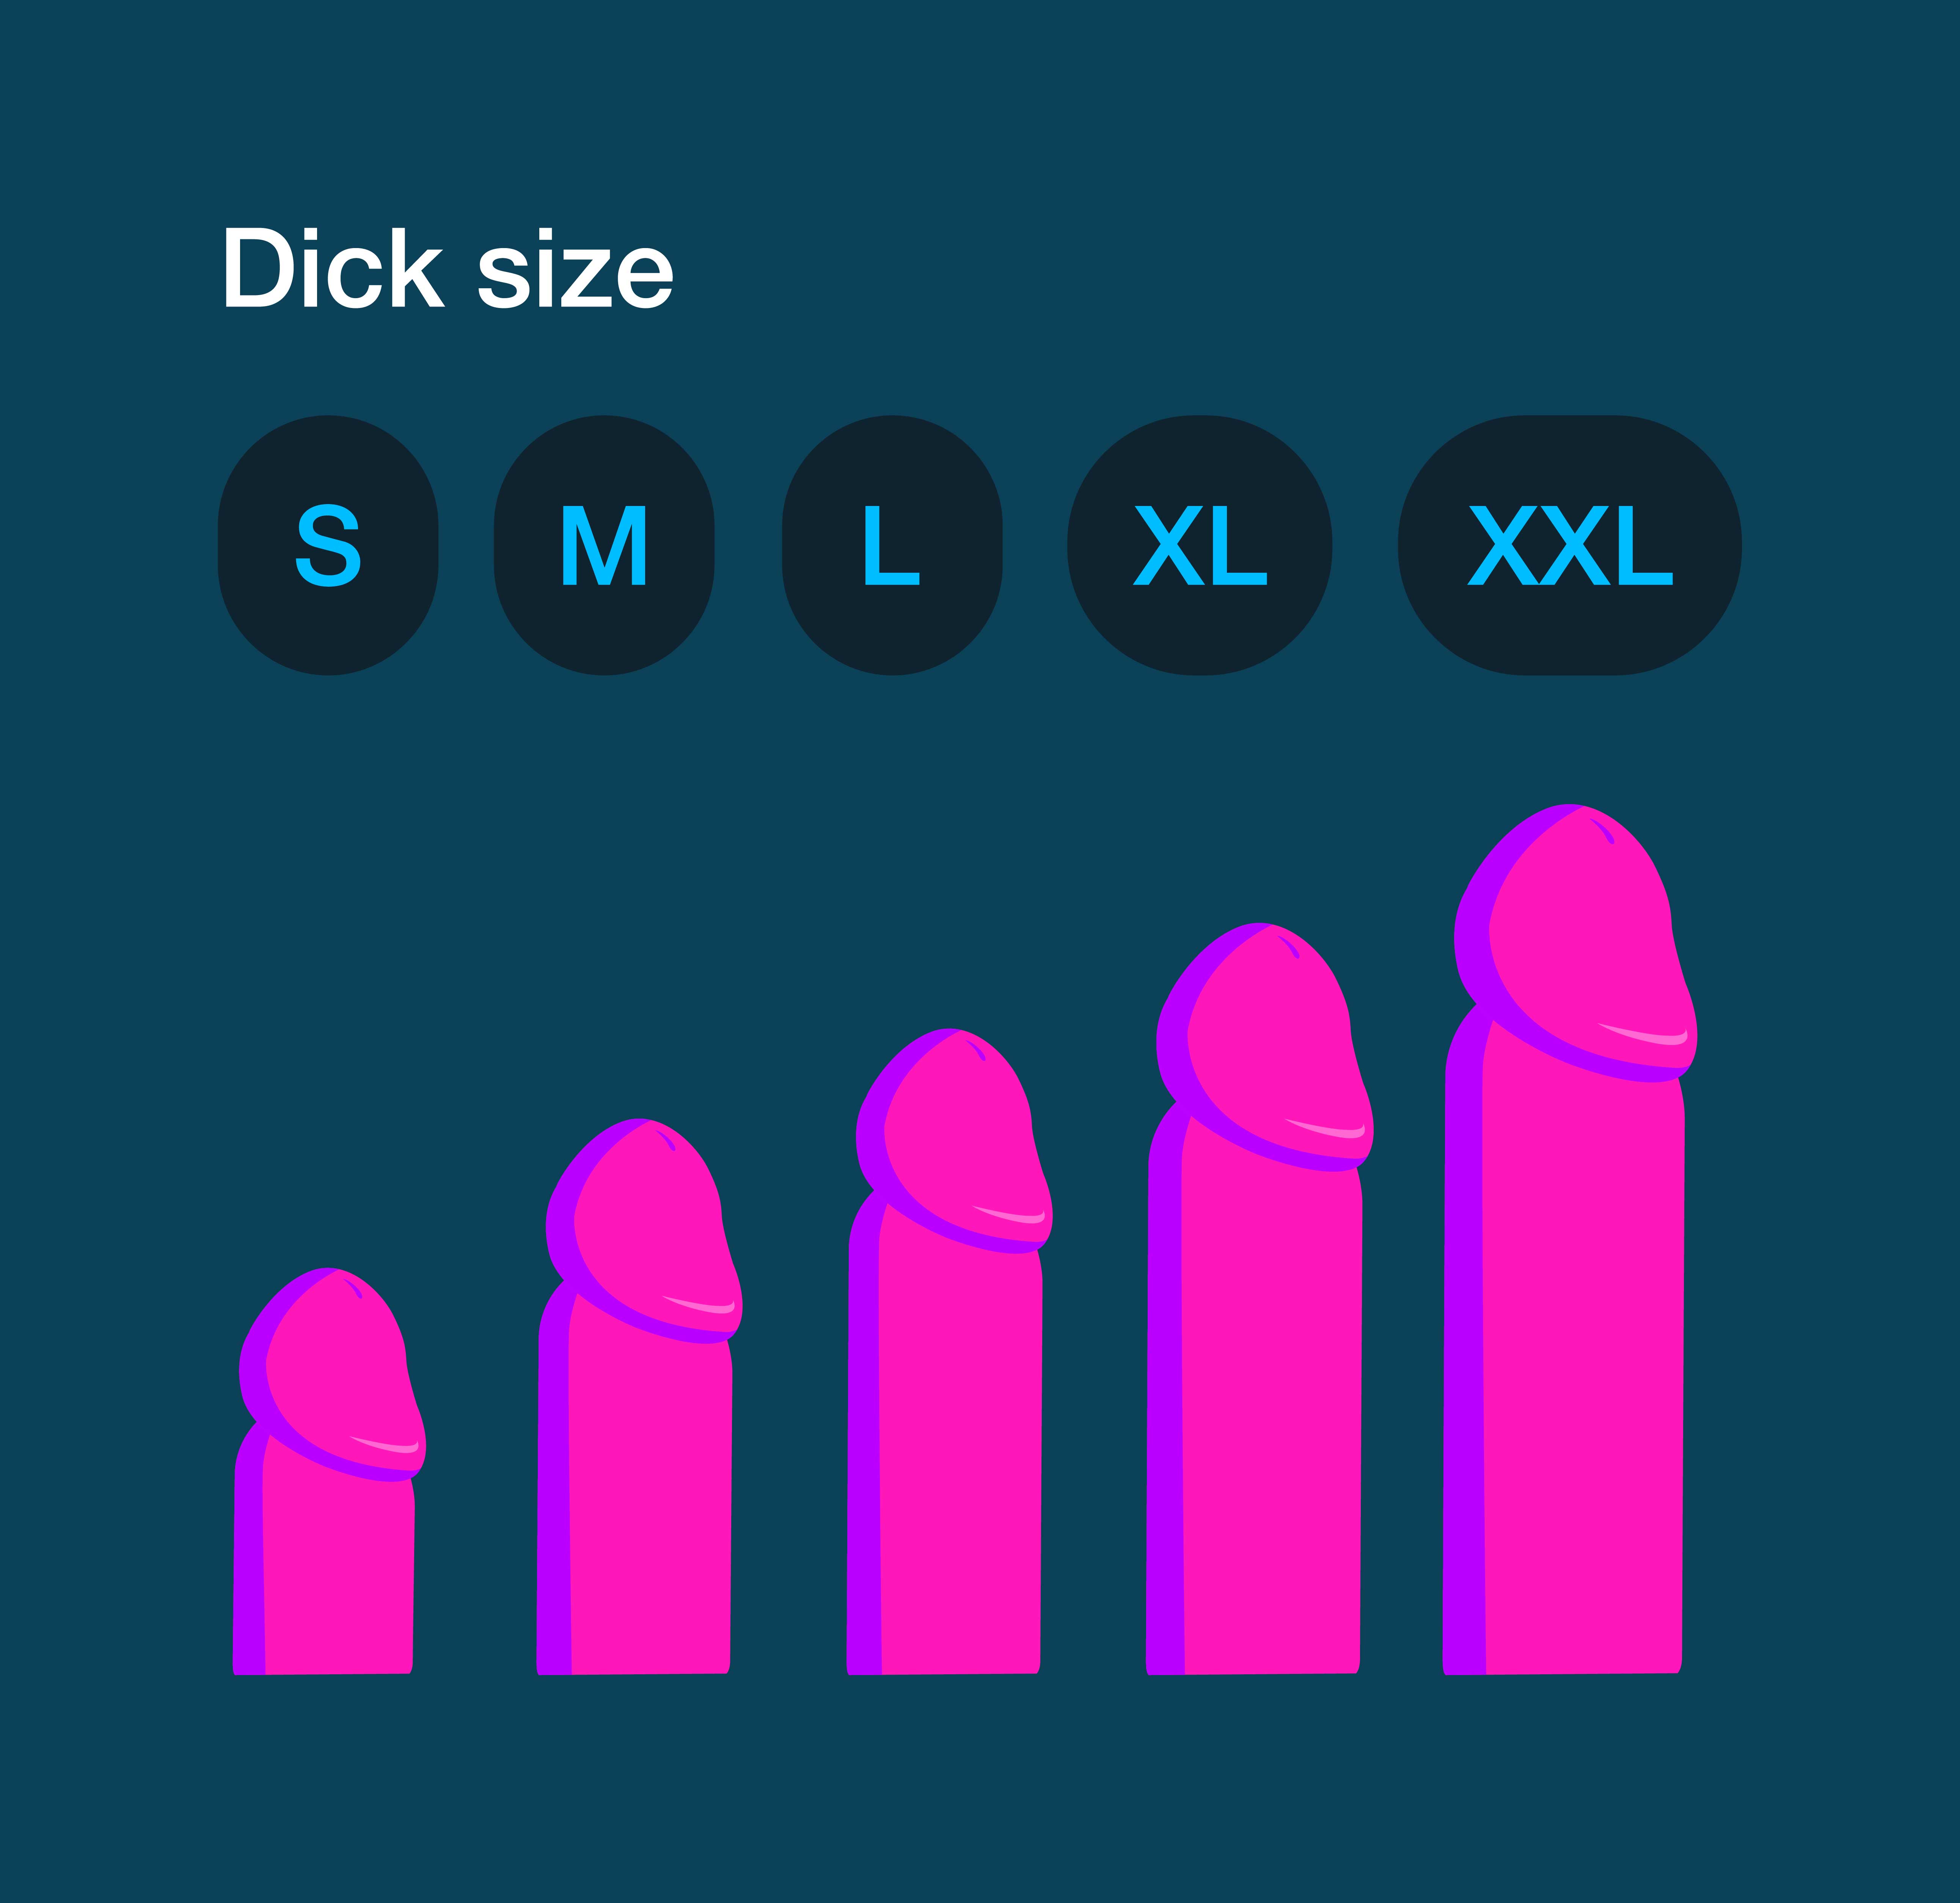 Dick size transfer